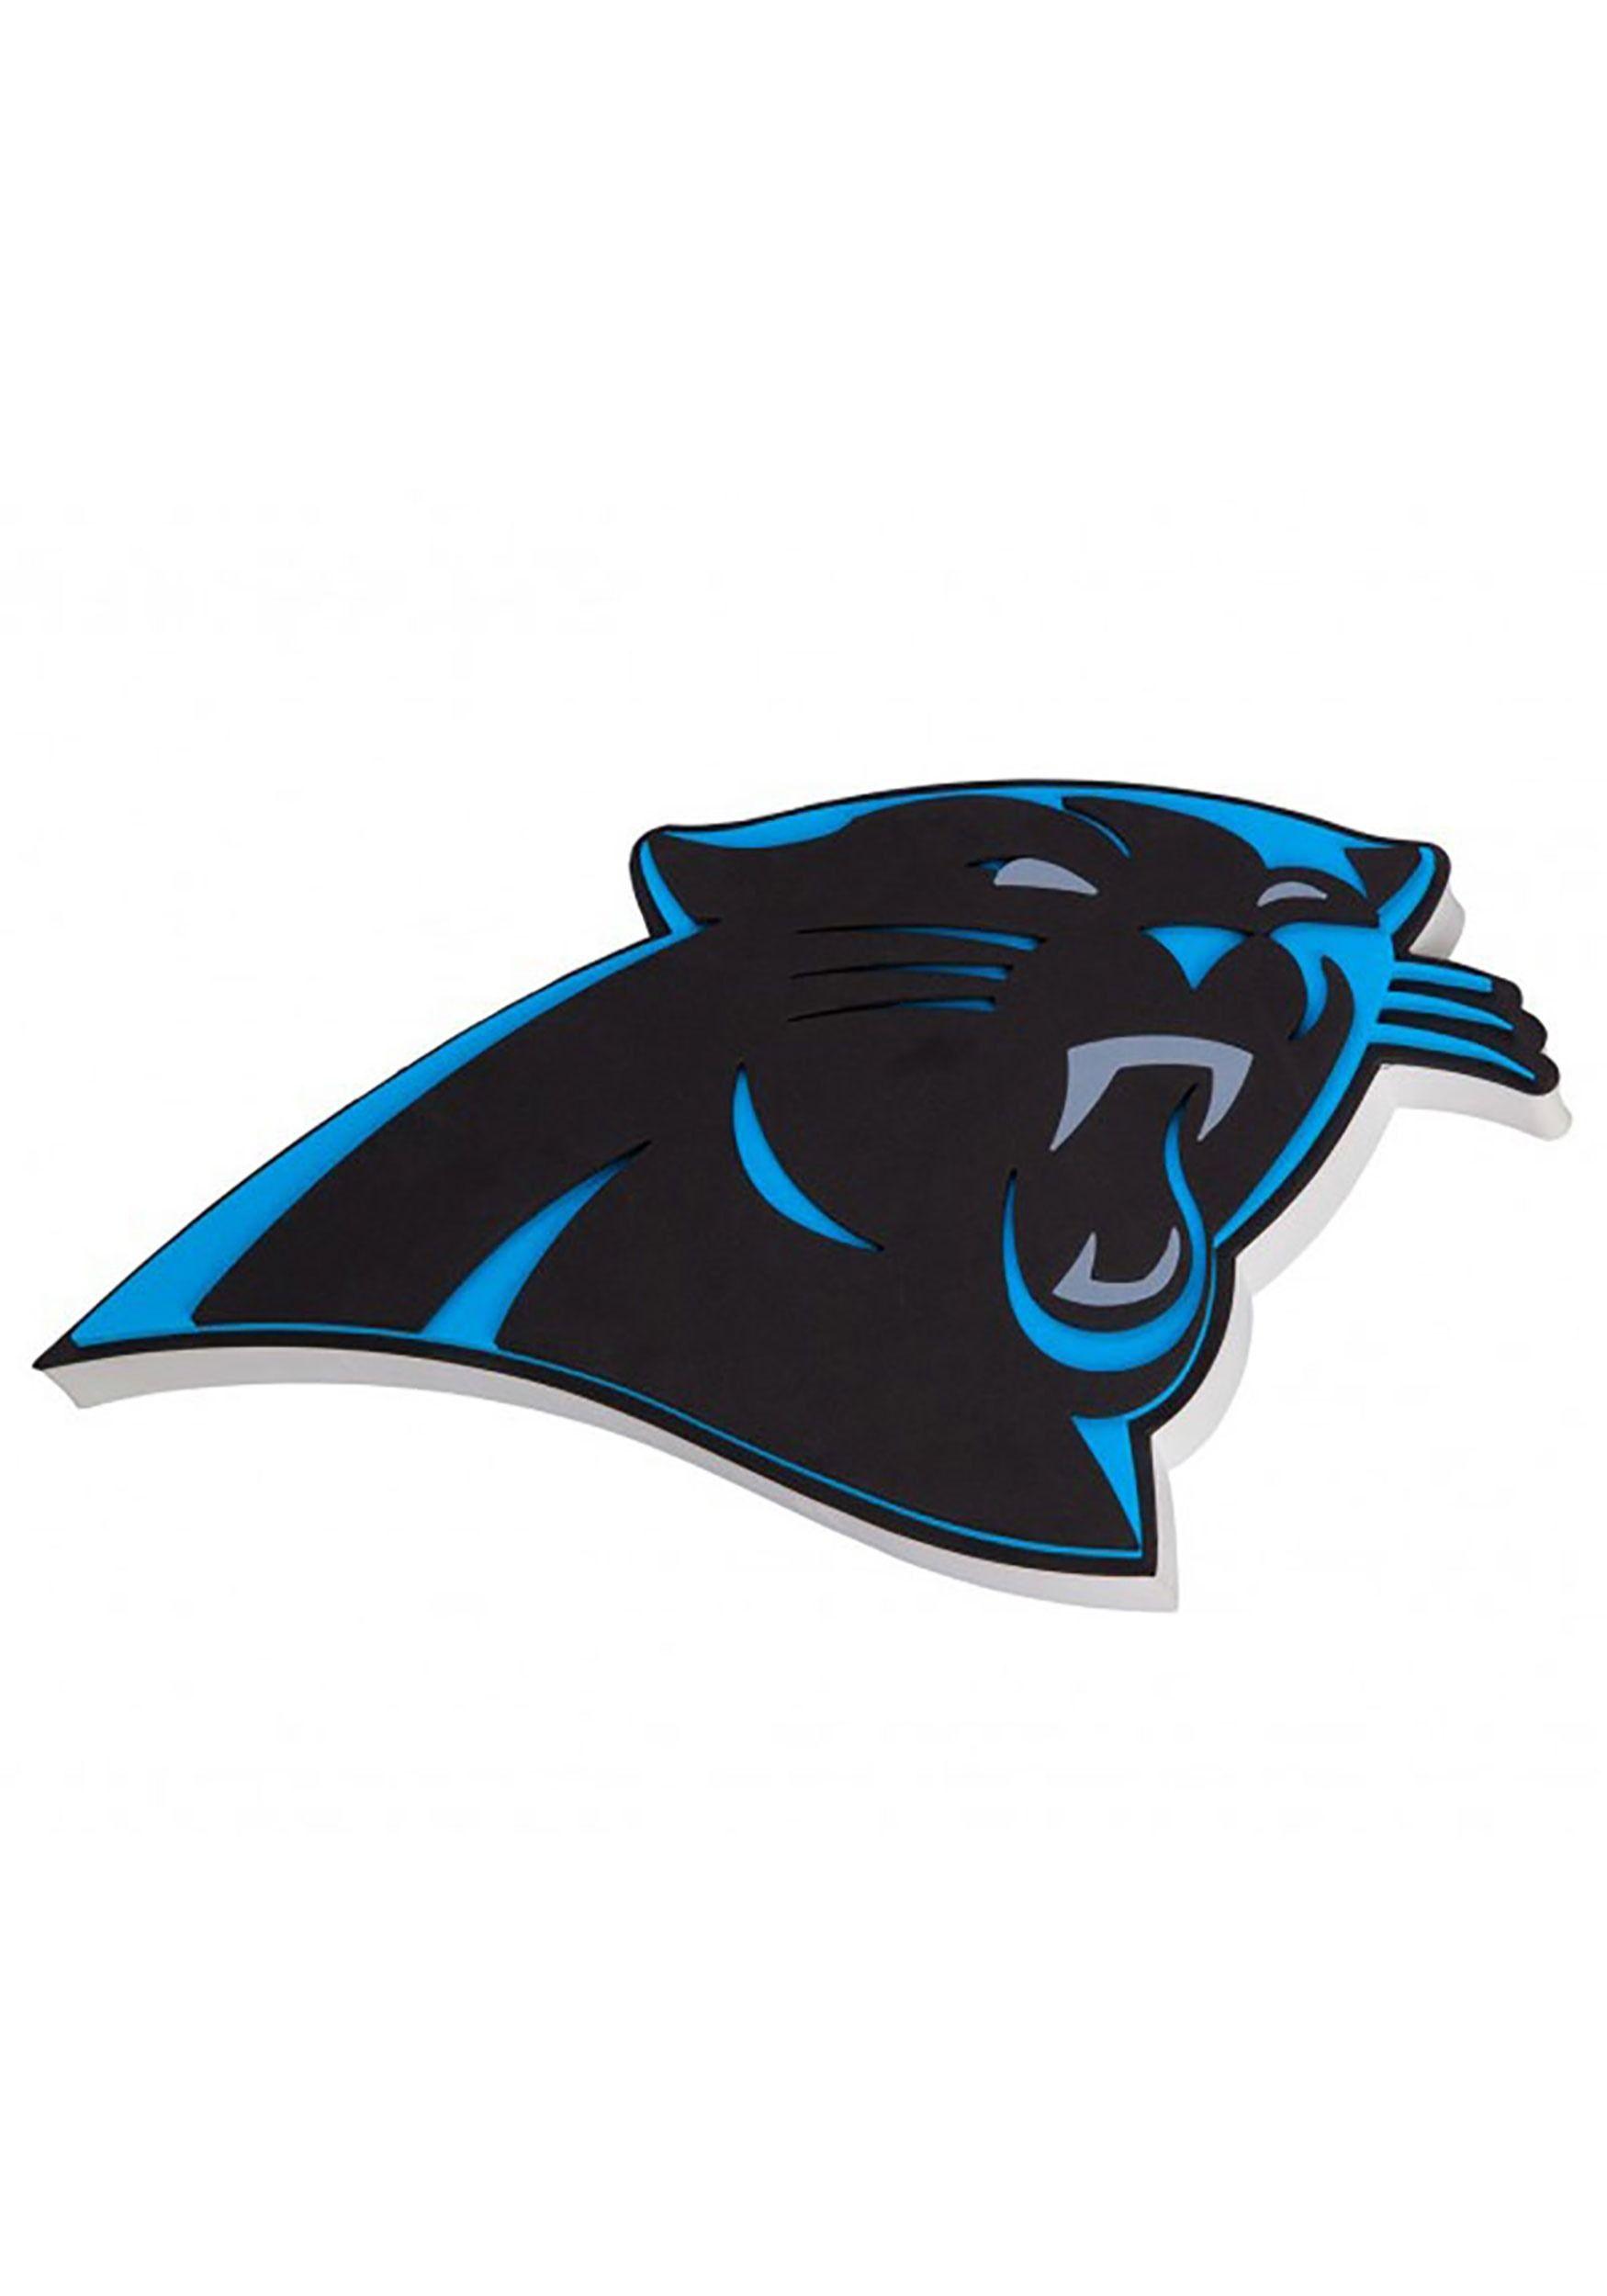 Pathers Logo - Carolina Panthers NFL Logo Foam Sign